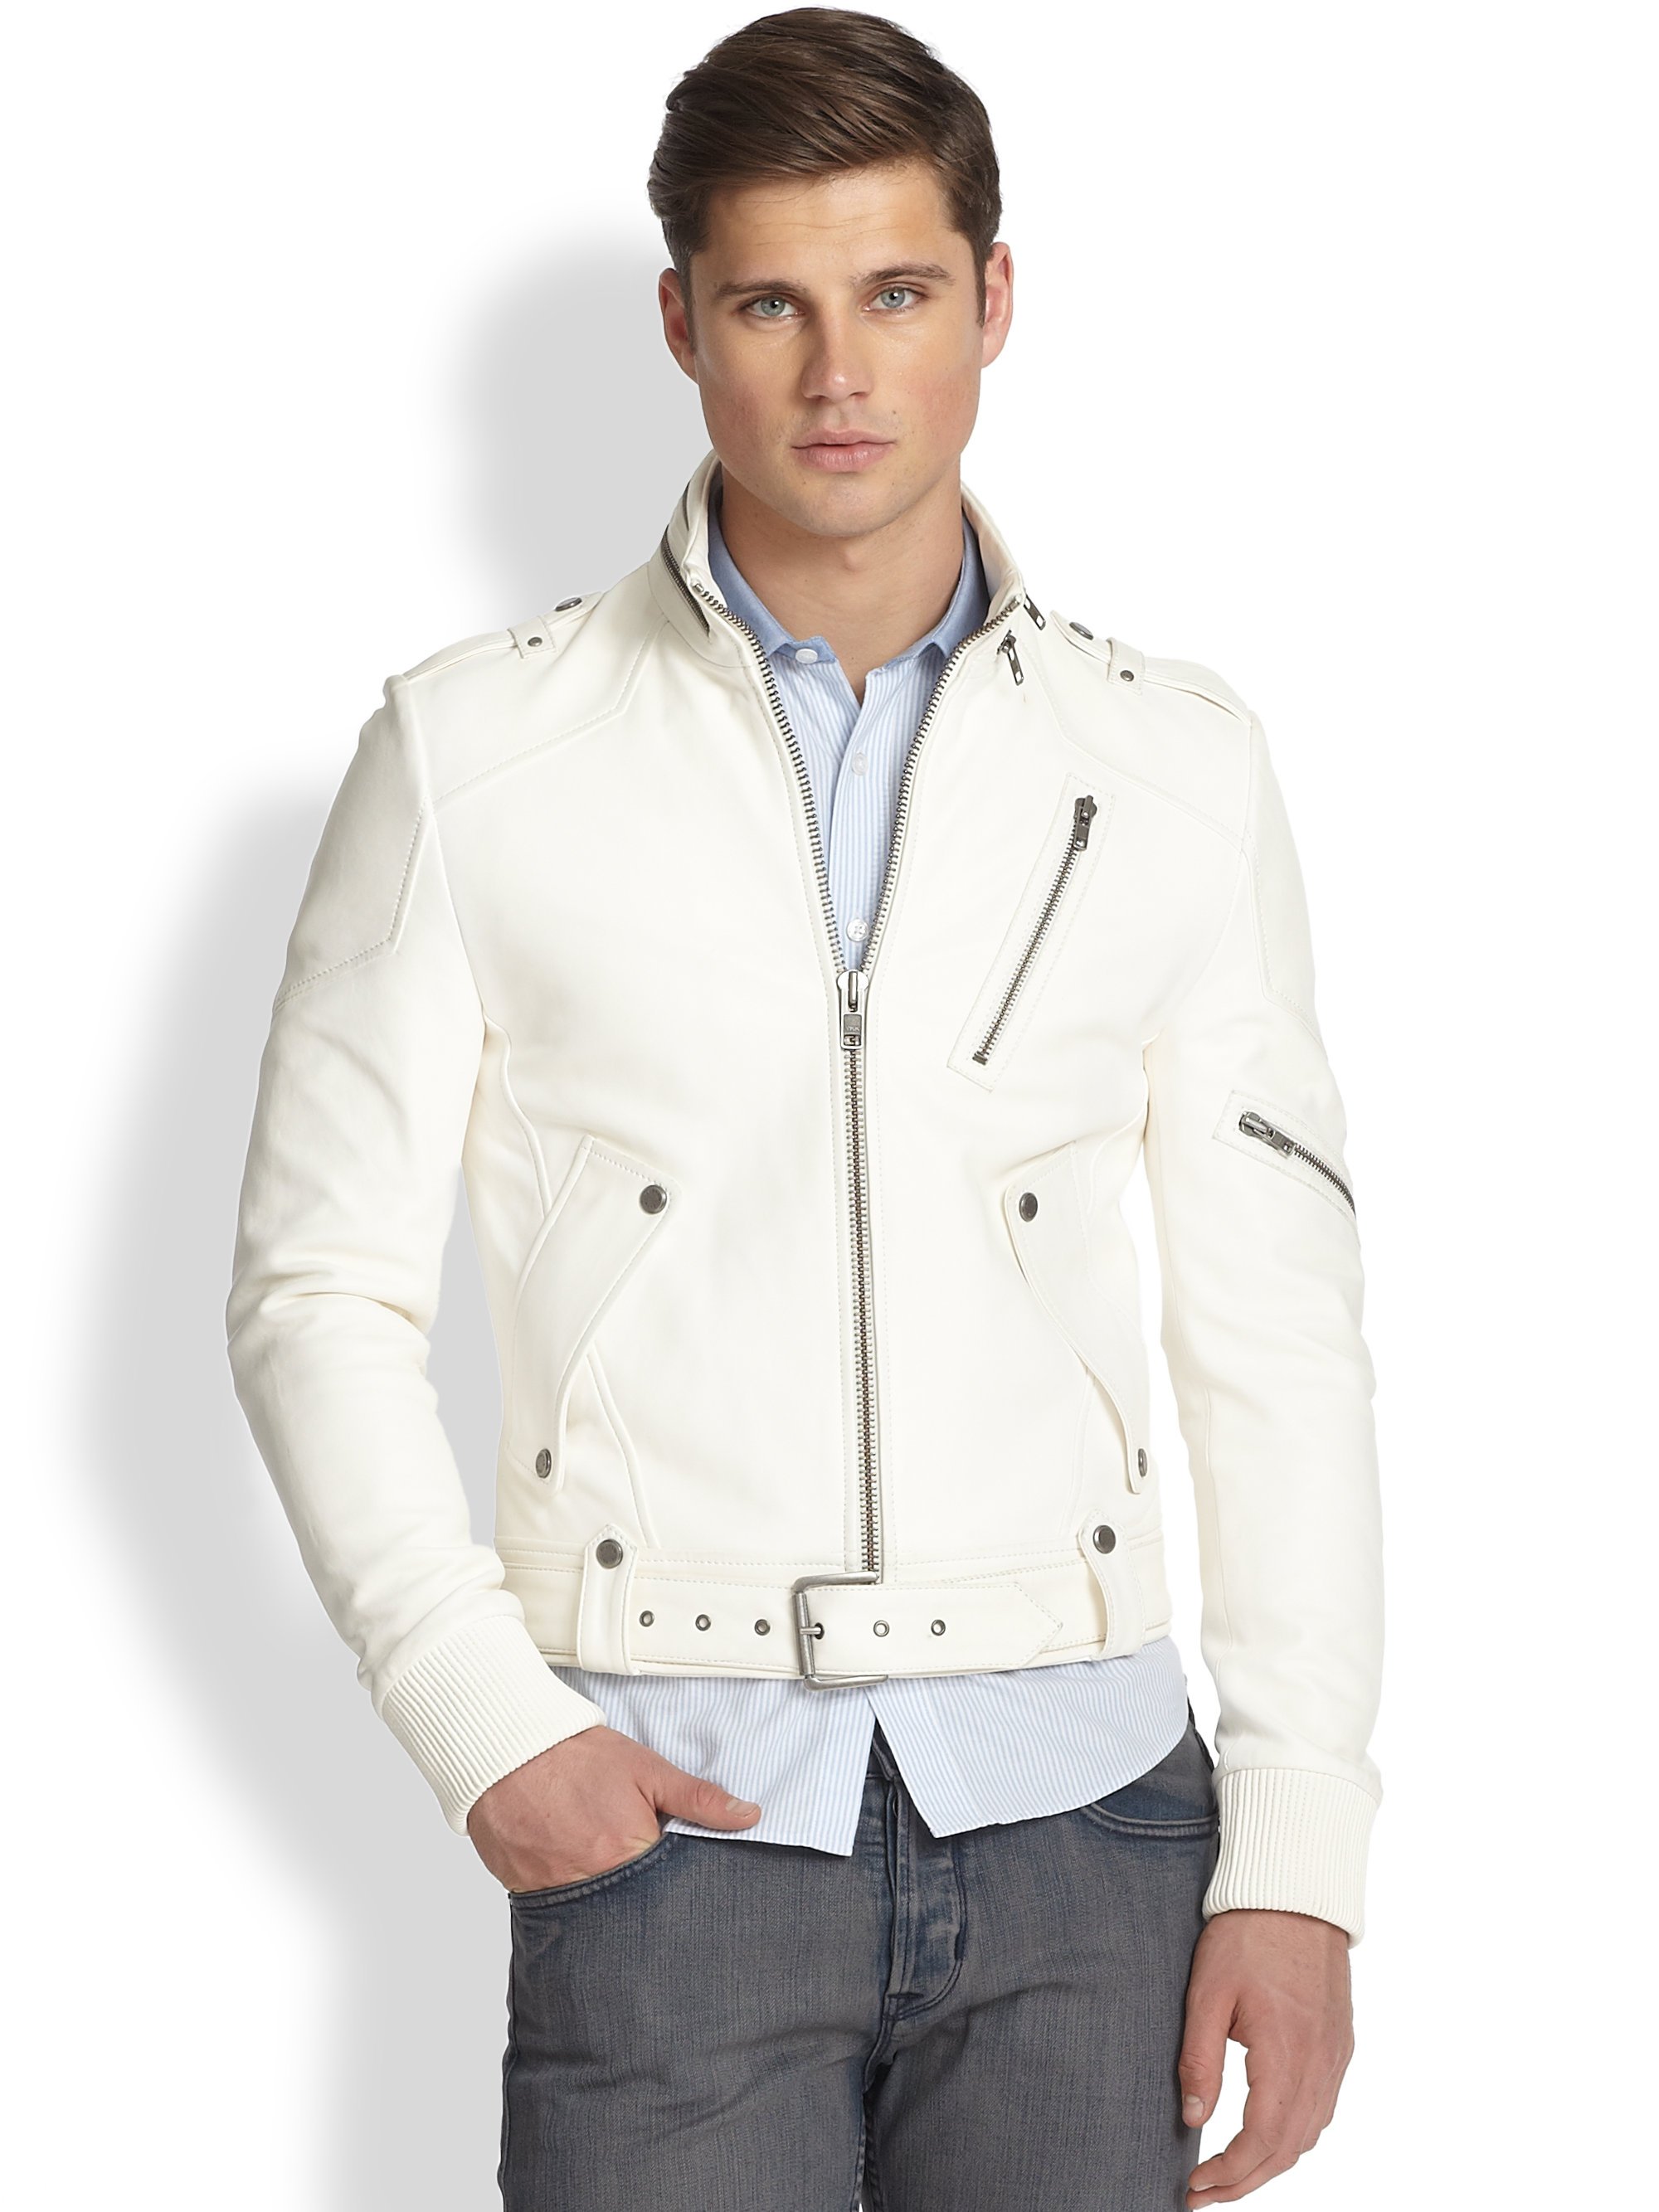 White Leather Jacket For Men | Varsity Apparel Jackets